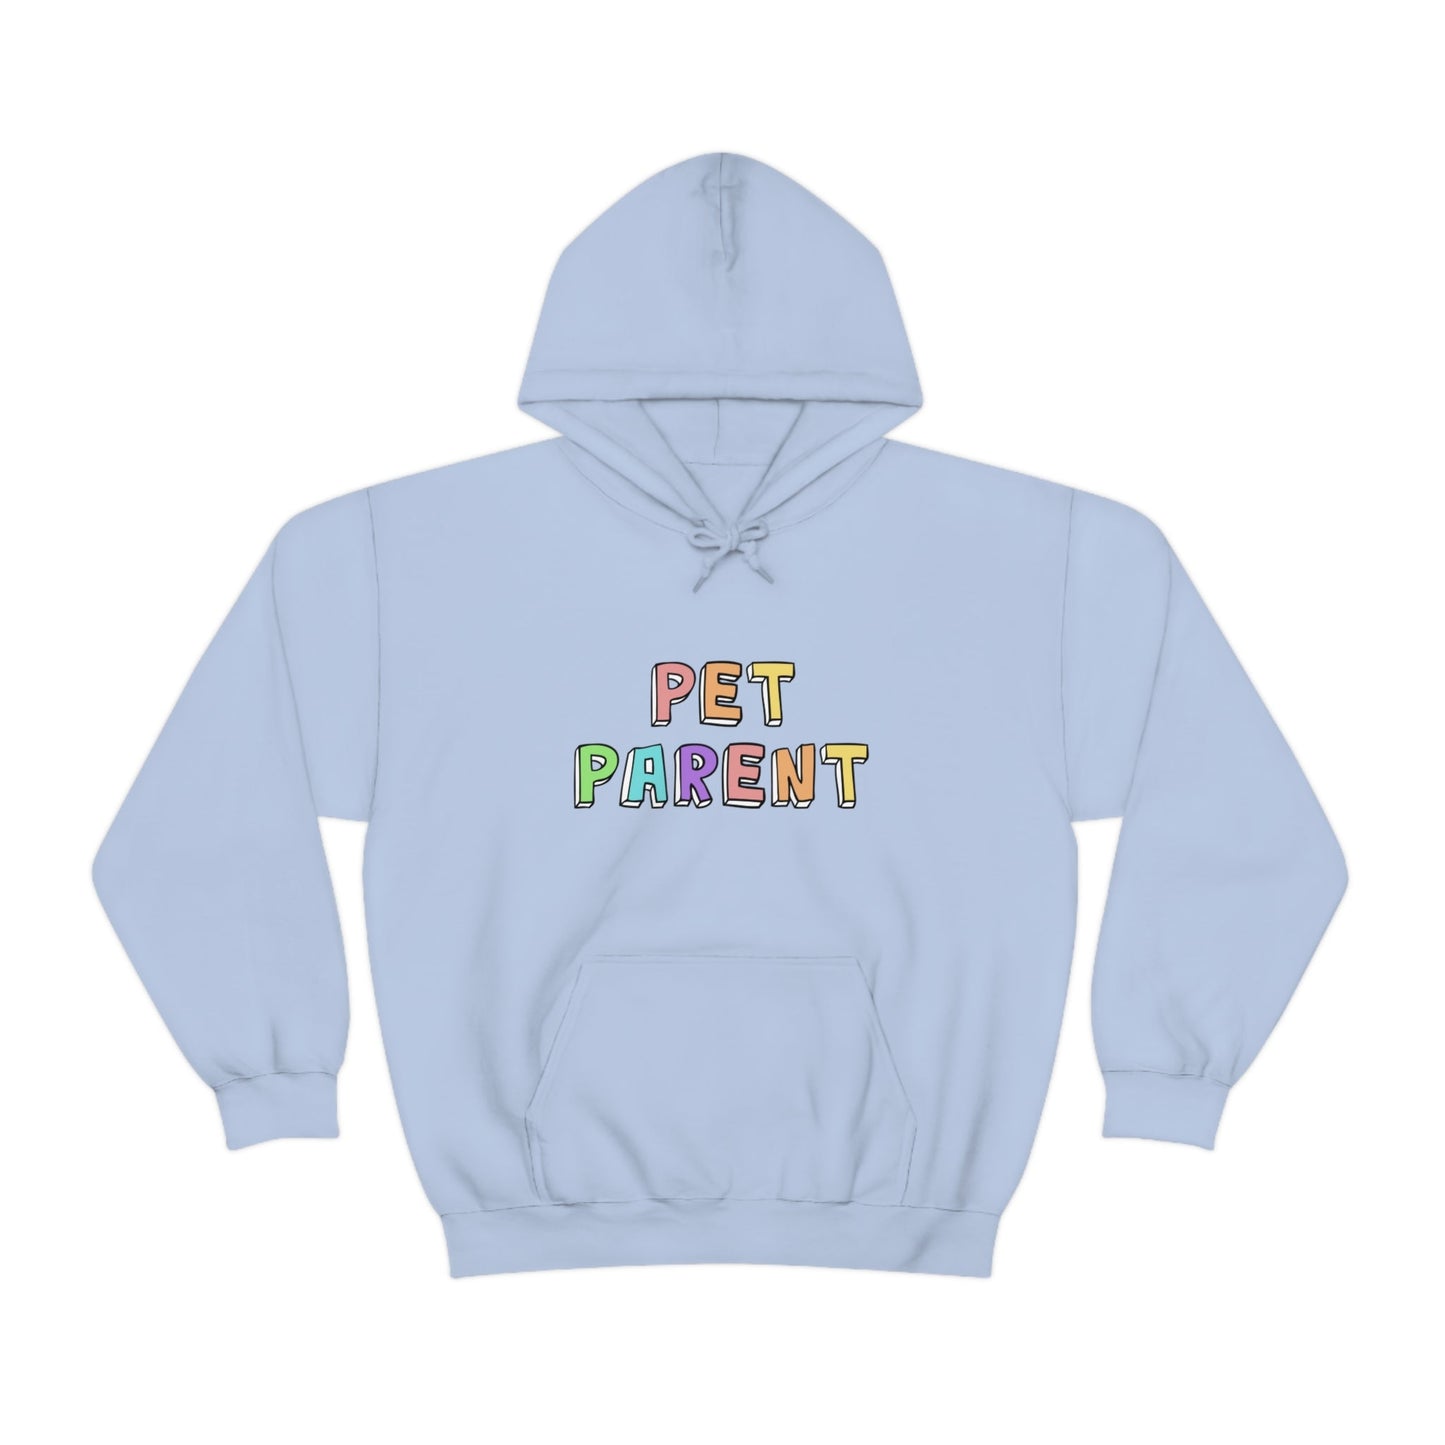 Pet Parent | Hooded Sweatshirt - Detezi Designs-10179187447276211249